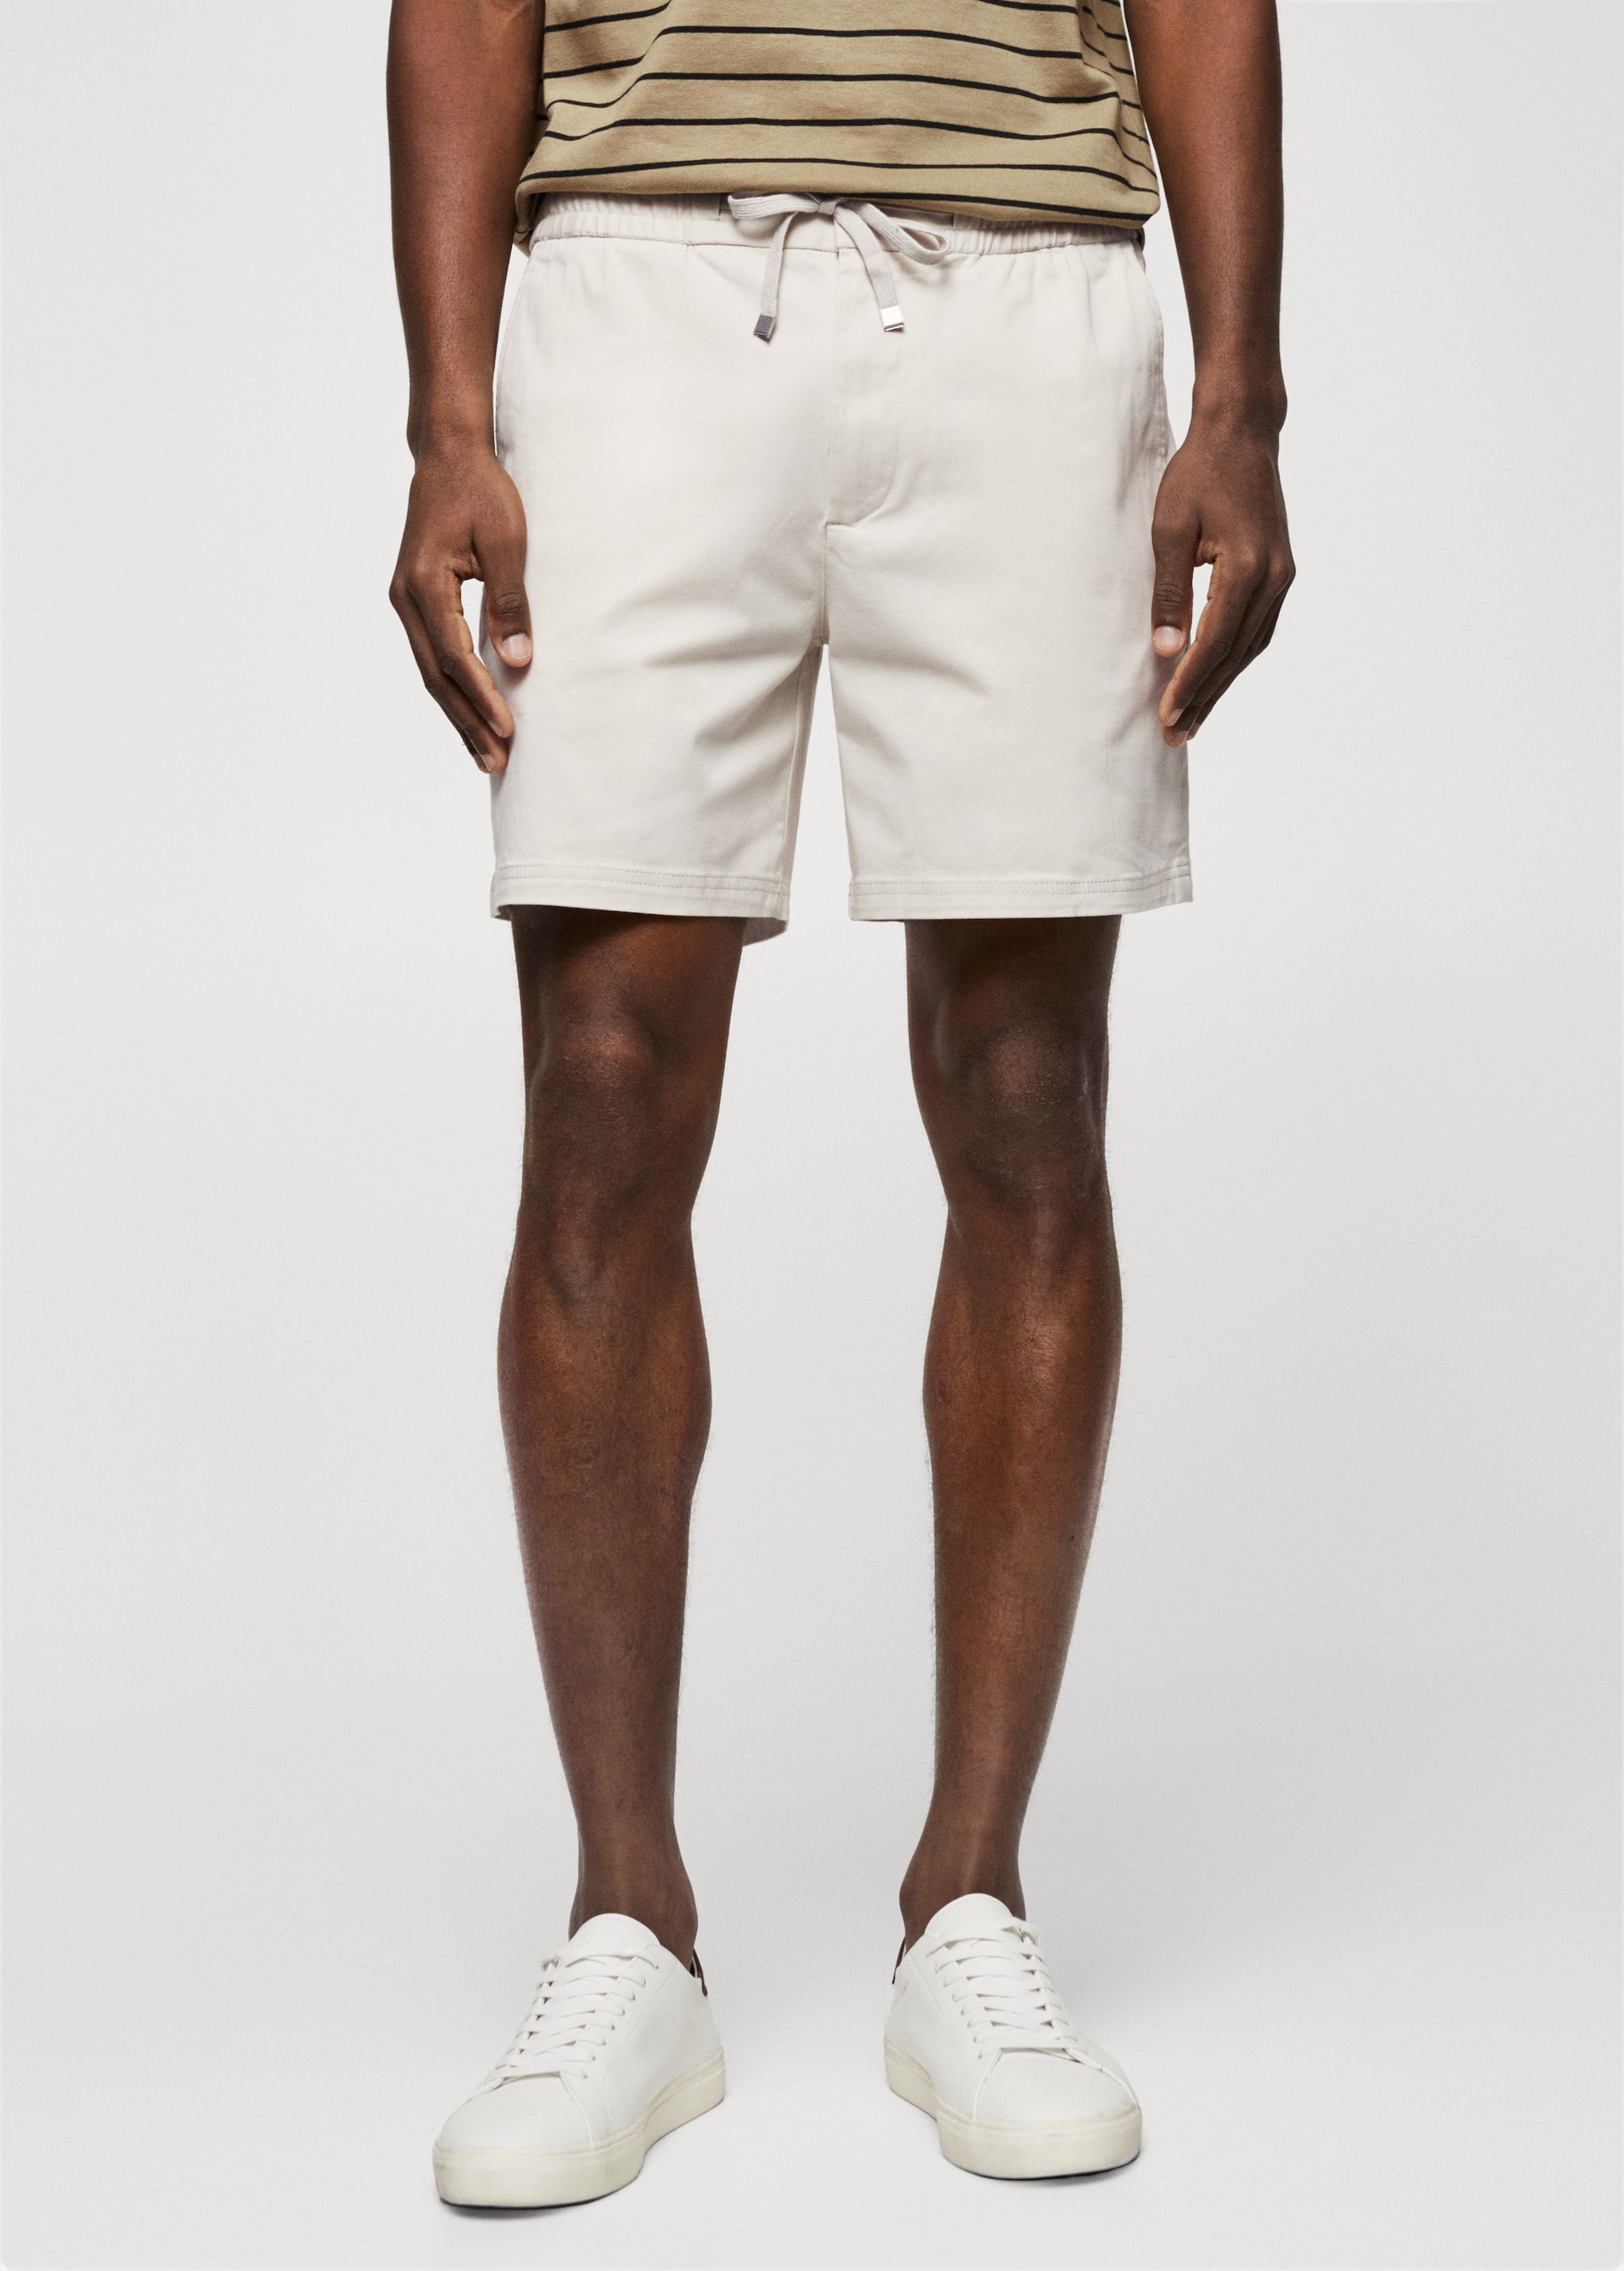 Cotton shorts with drawstring - Medium plane